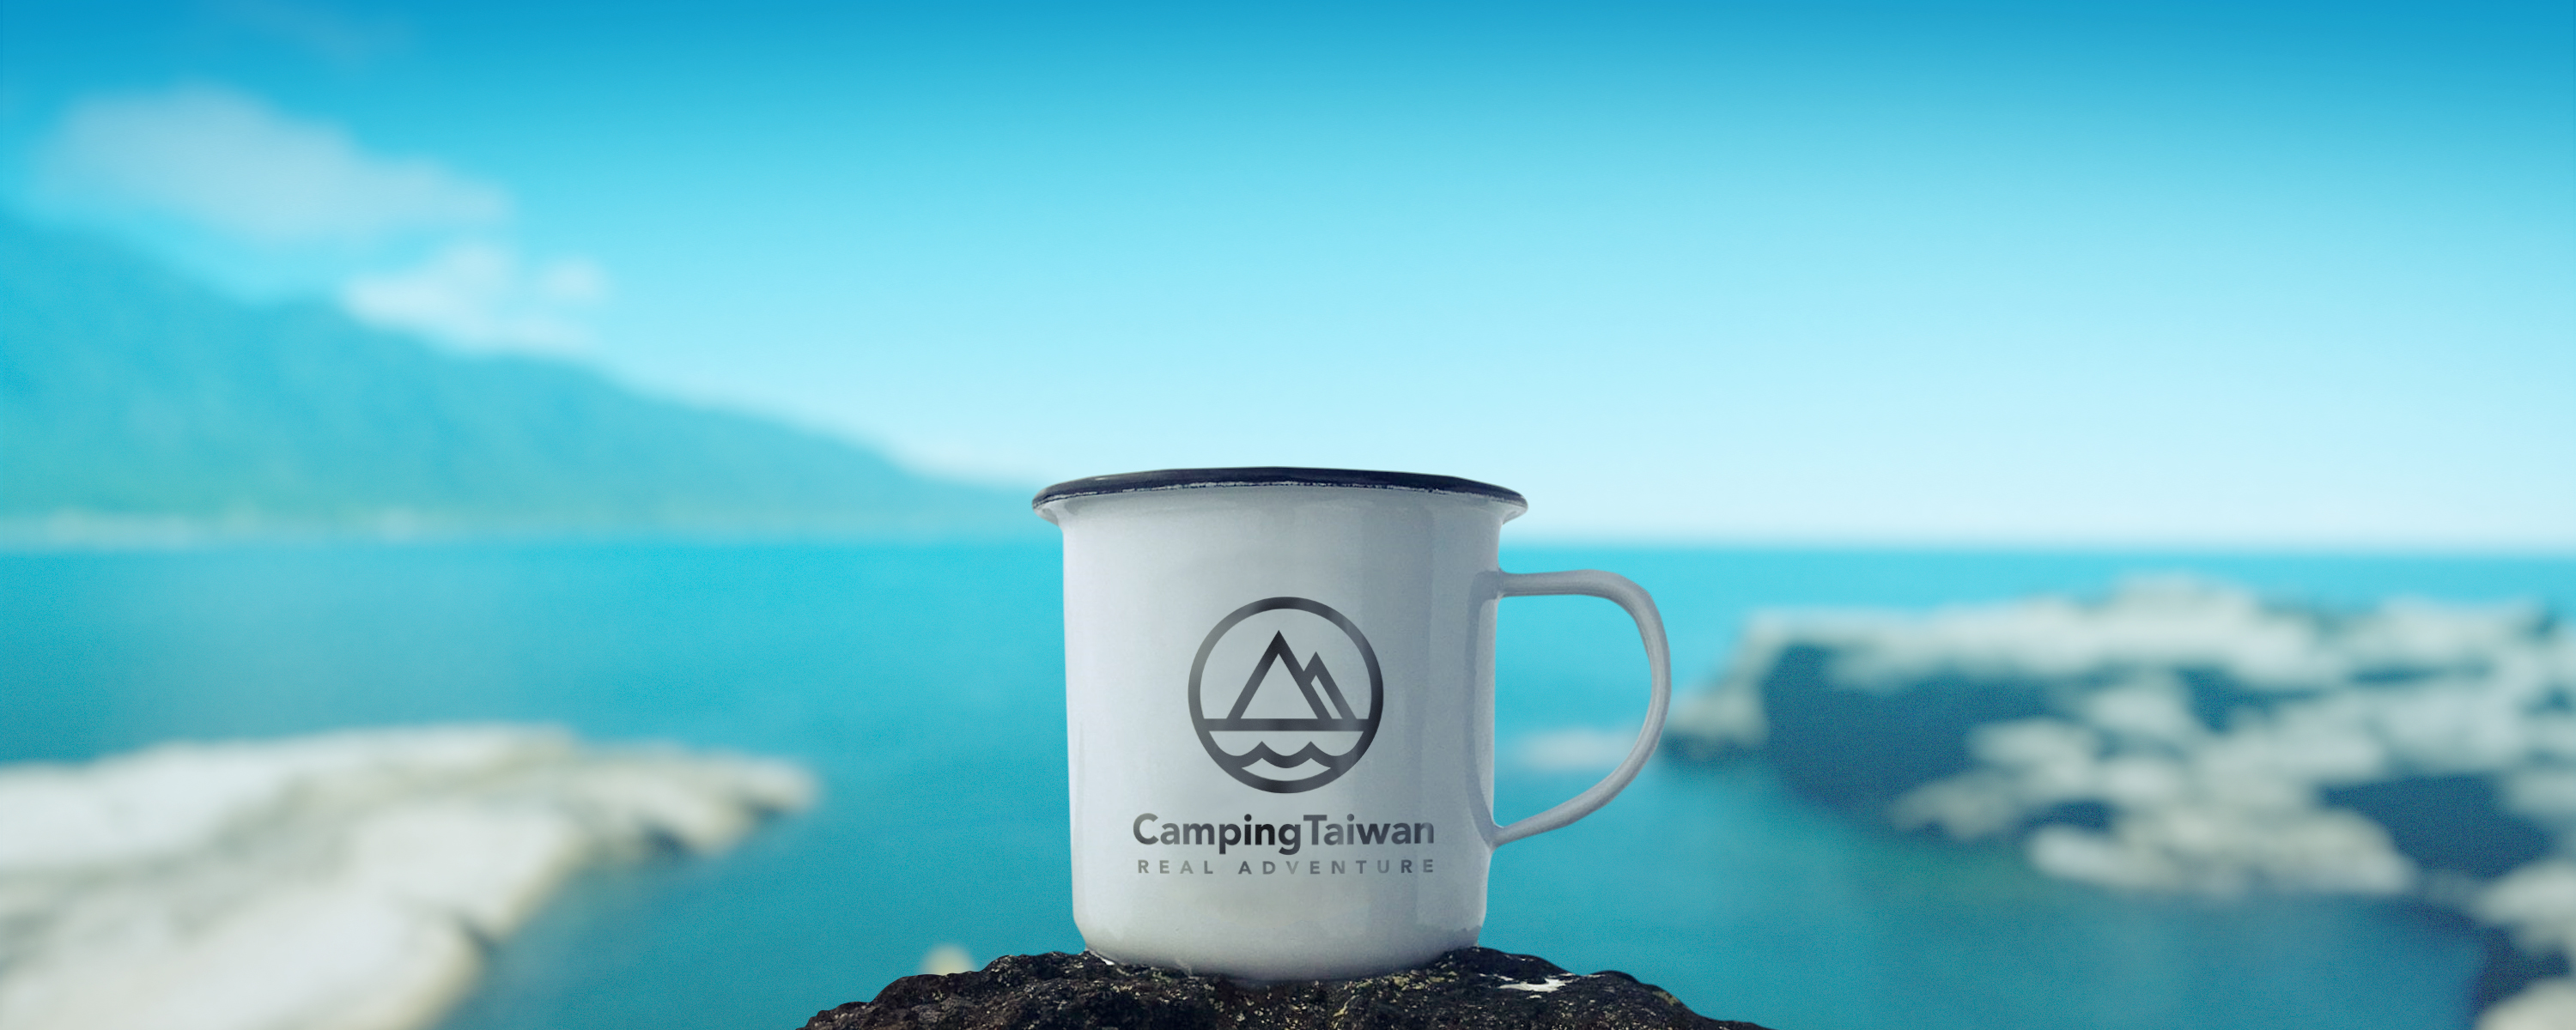 CampingTaiwan Logo Design Printed on Enamel Mug